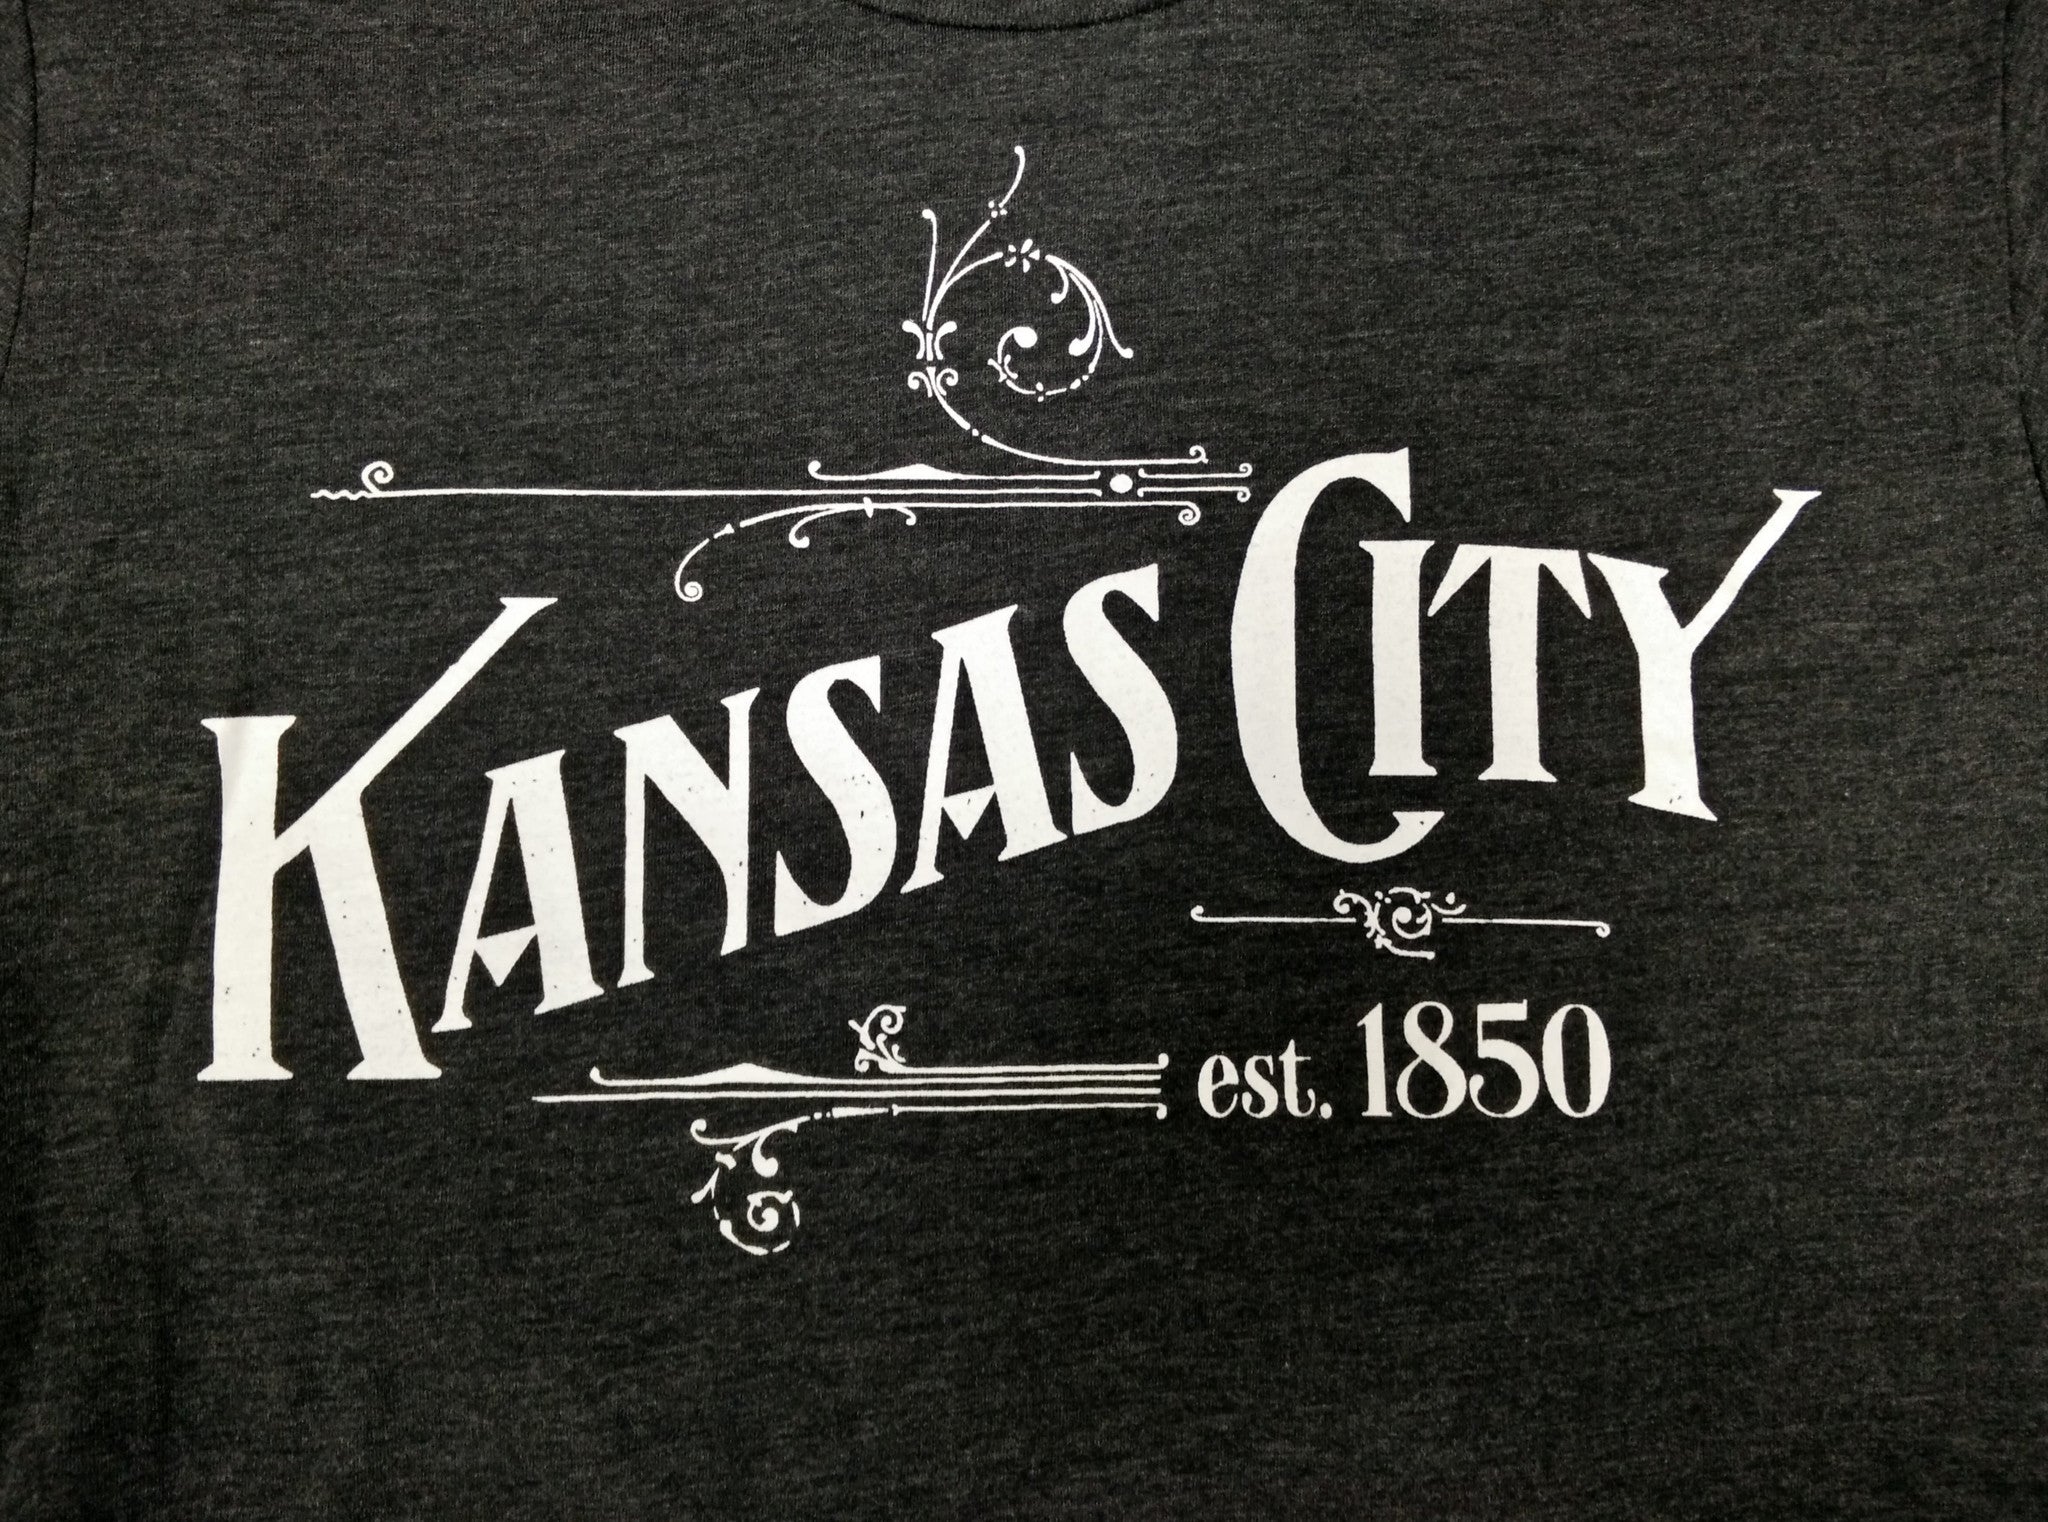 Just a Kid from Kansas City T-Shirt